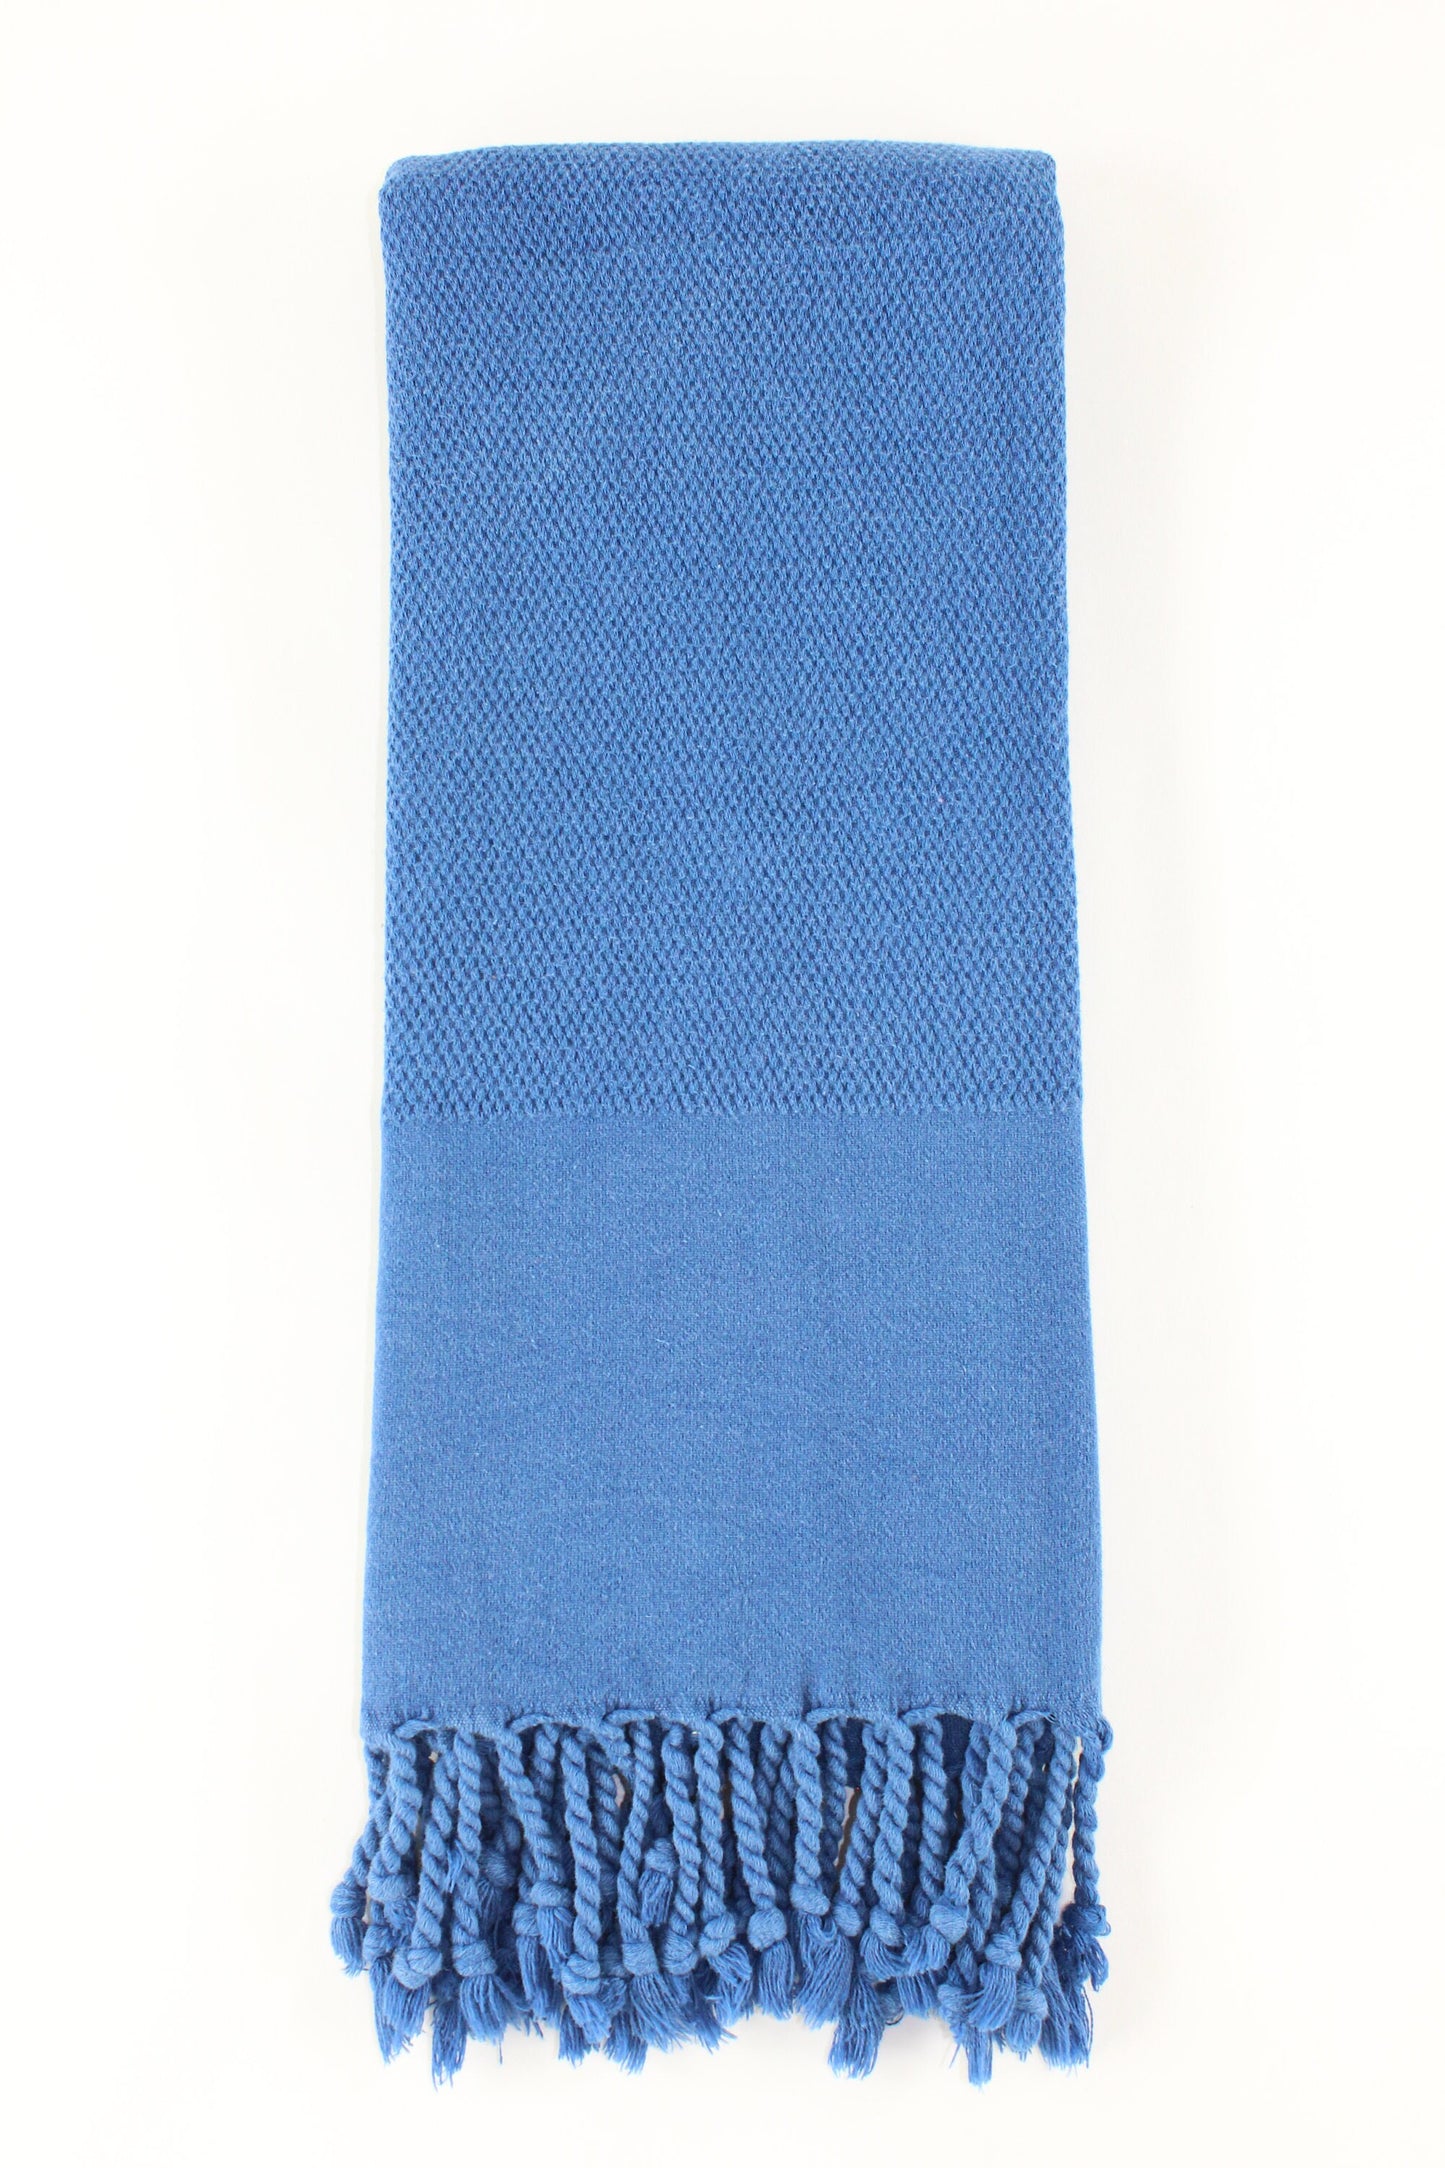 Premium Turkish Stone Washed Towel Peshtemal Fouta (Denim Blue)